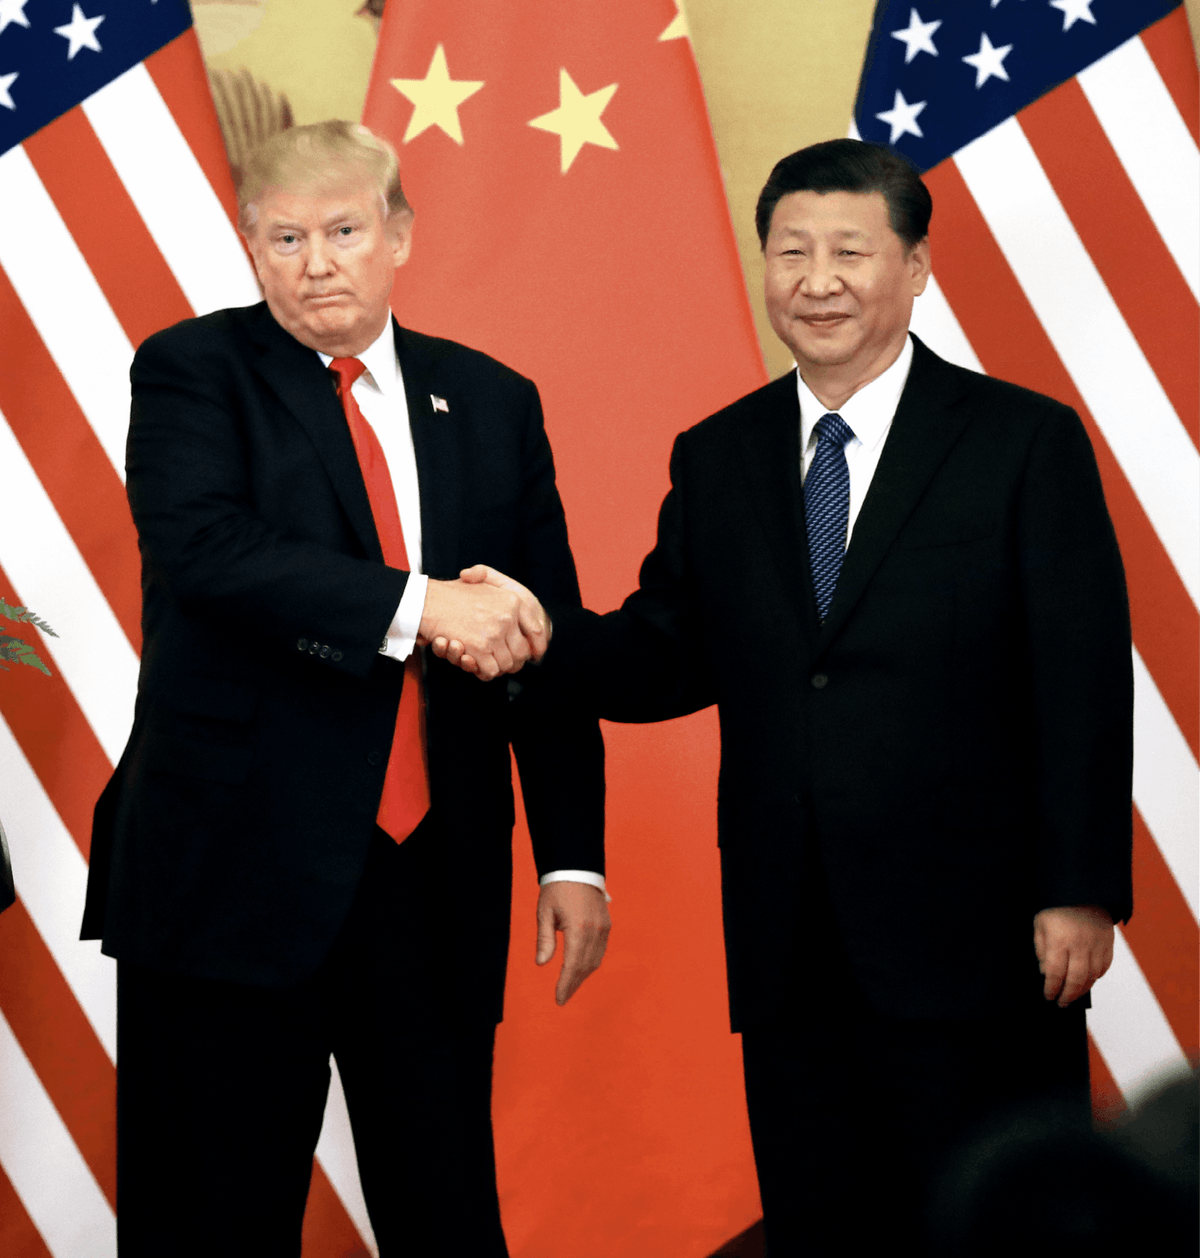 Jun Yasukawa, 9 novembre 2017, photographie. Poignée de mains sous tensions entre Donald Trump et Xi Jinping